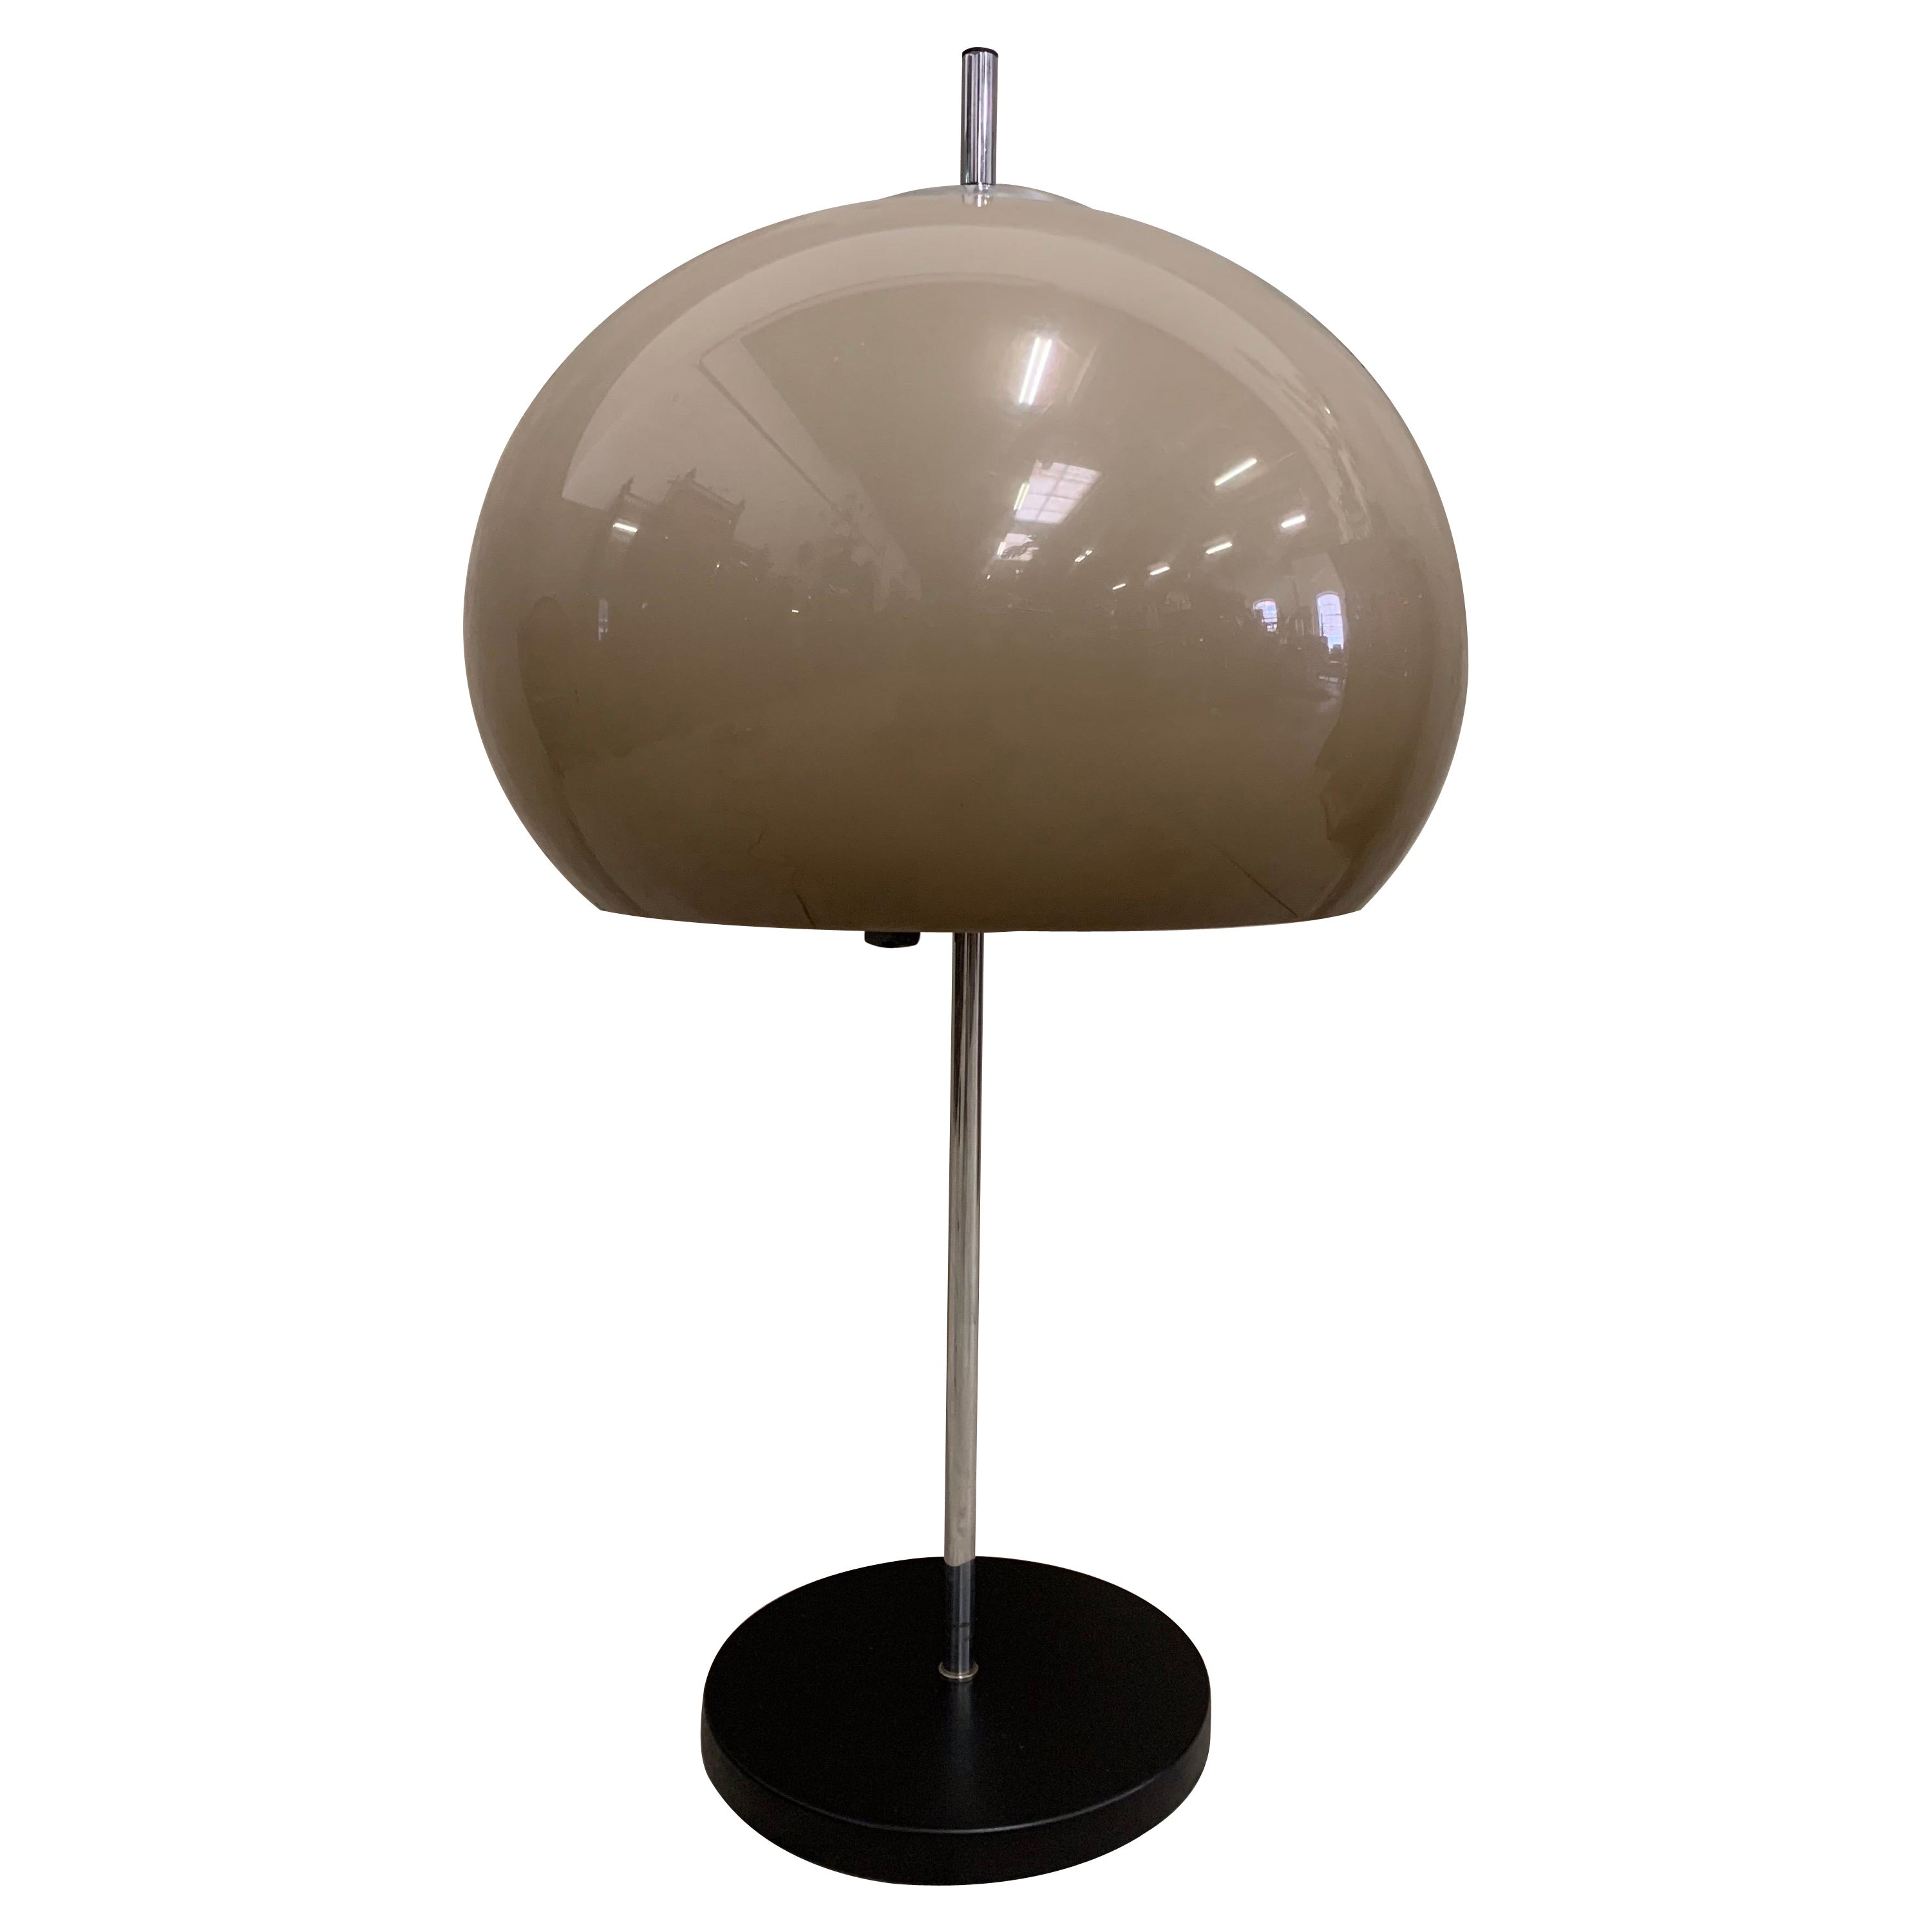 1970s Mushroom Lamp, Design Lamp, Dijkstra Holland, Midcentury